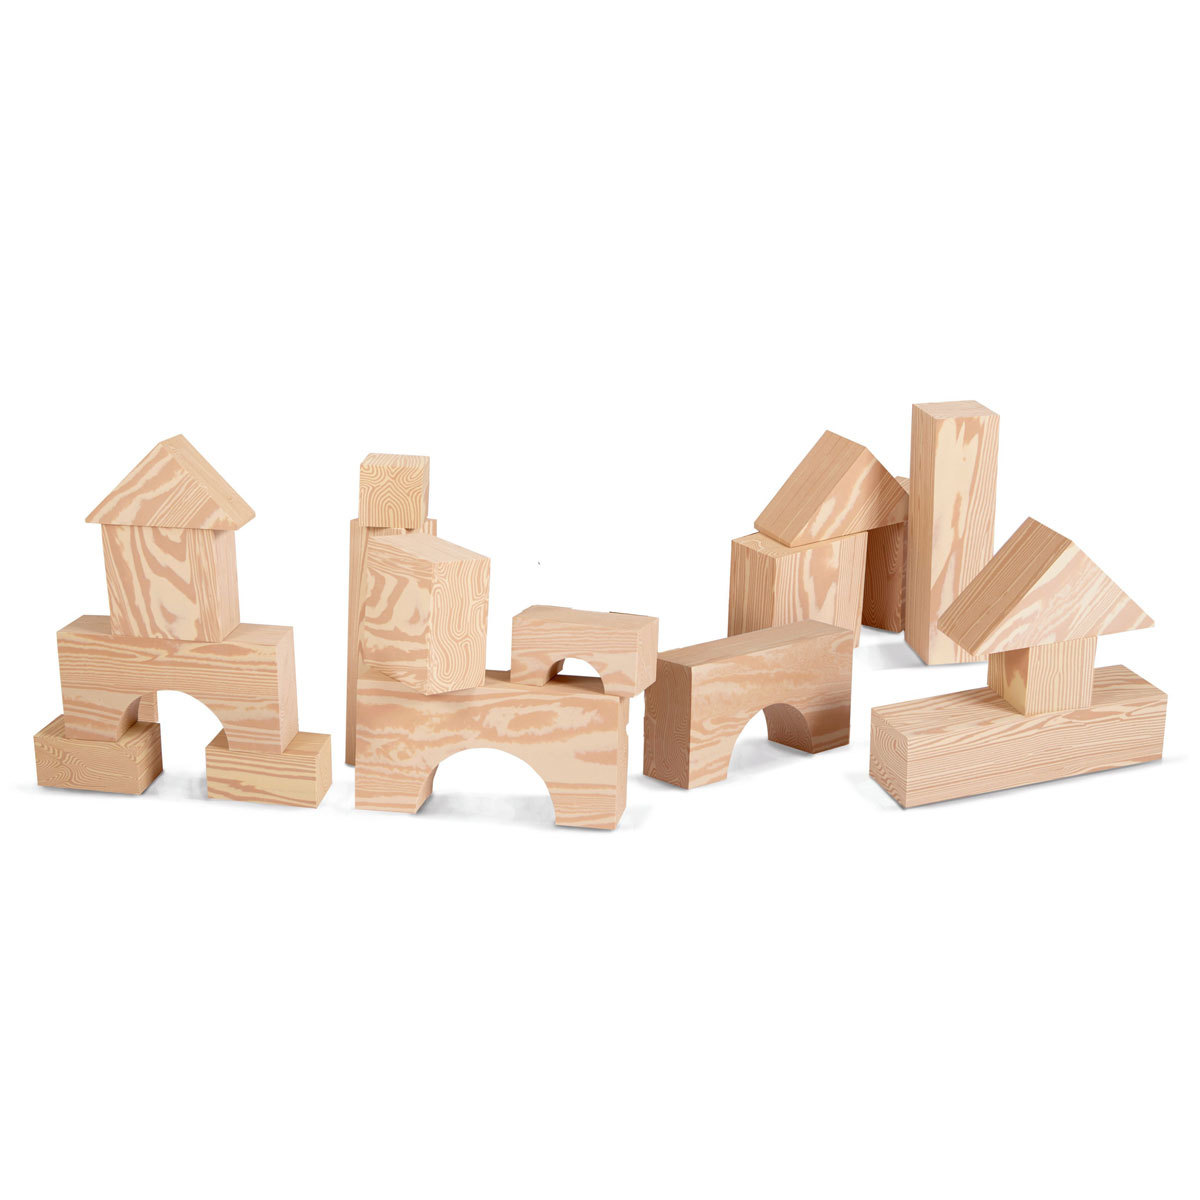 Eudufoam: Big Wood-Like Block Building Set